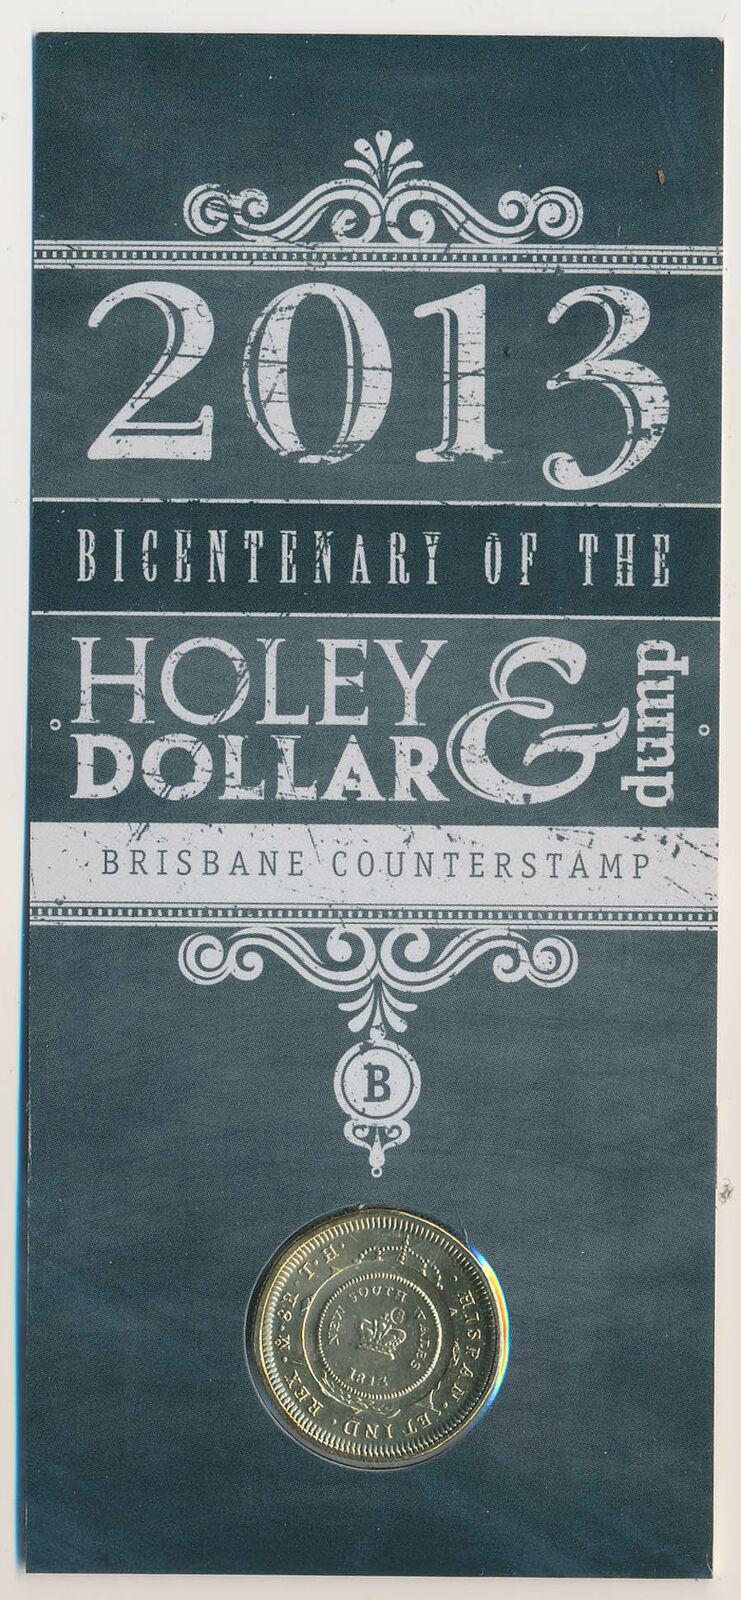 Thumbnail for 2013 Holey Dollar & Dump Bicentenary - Brisbane Counterstamp